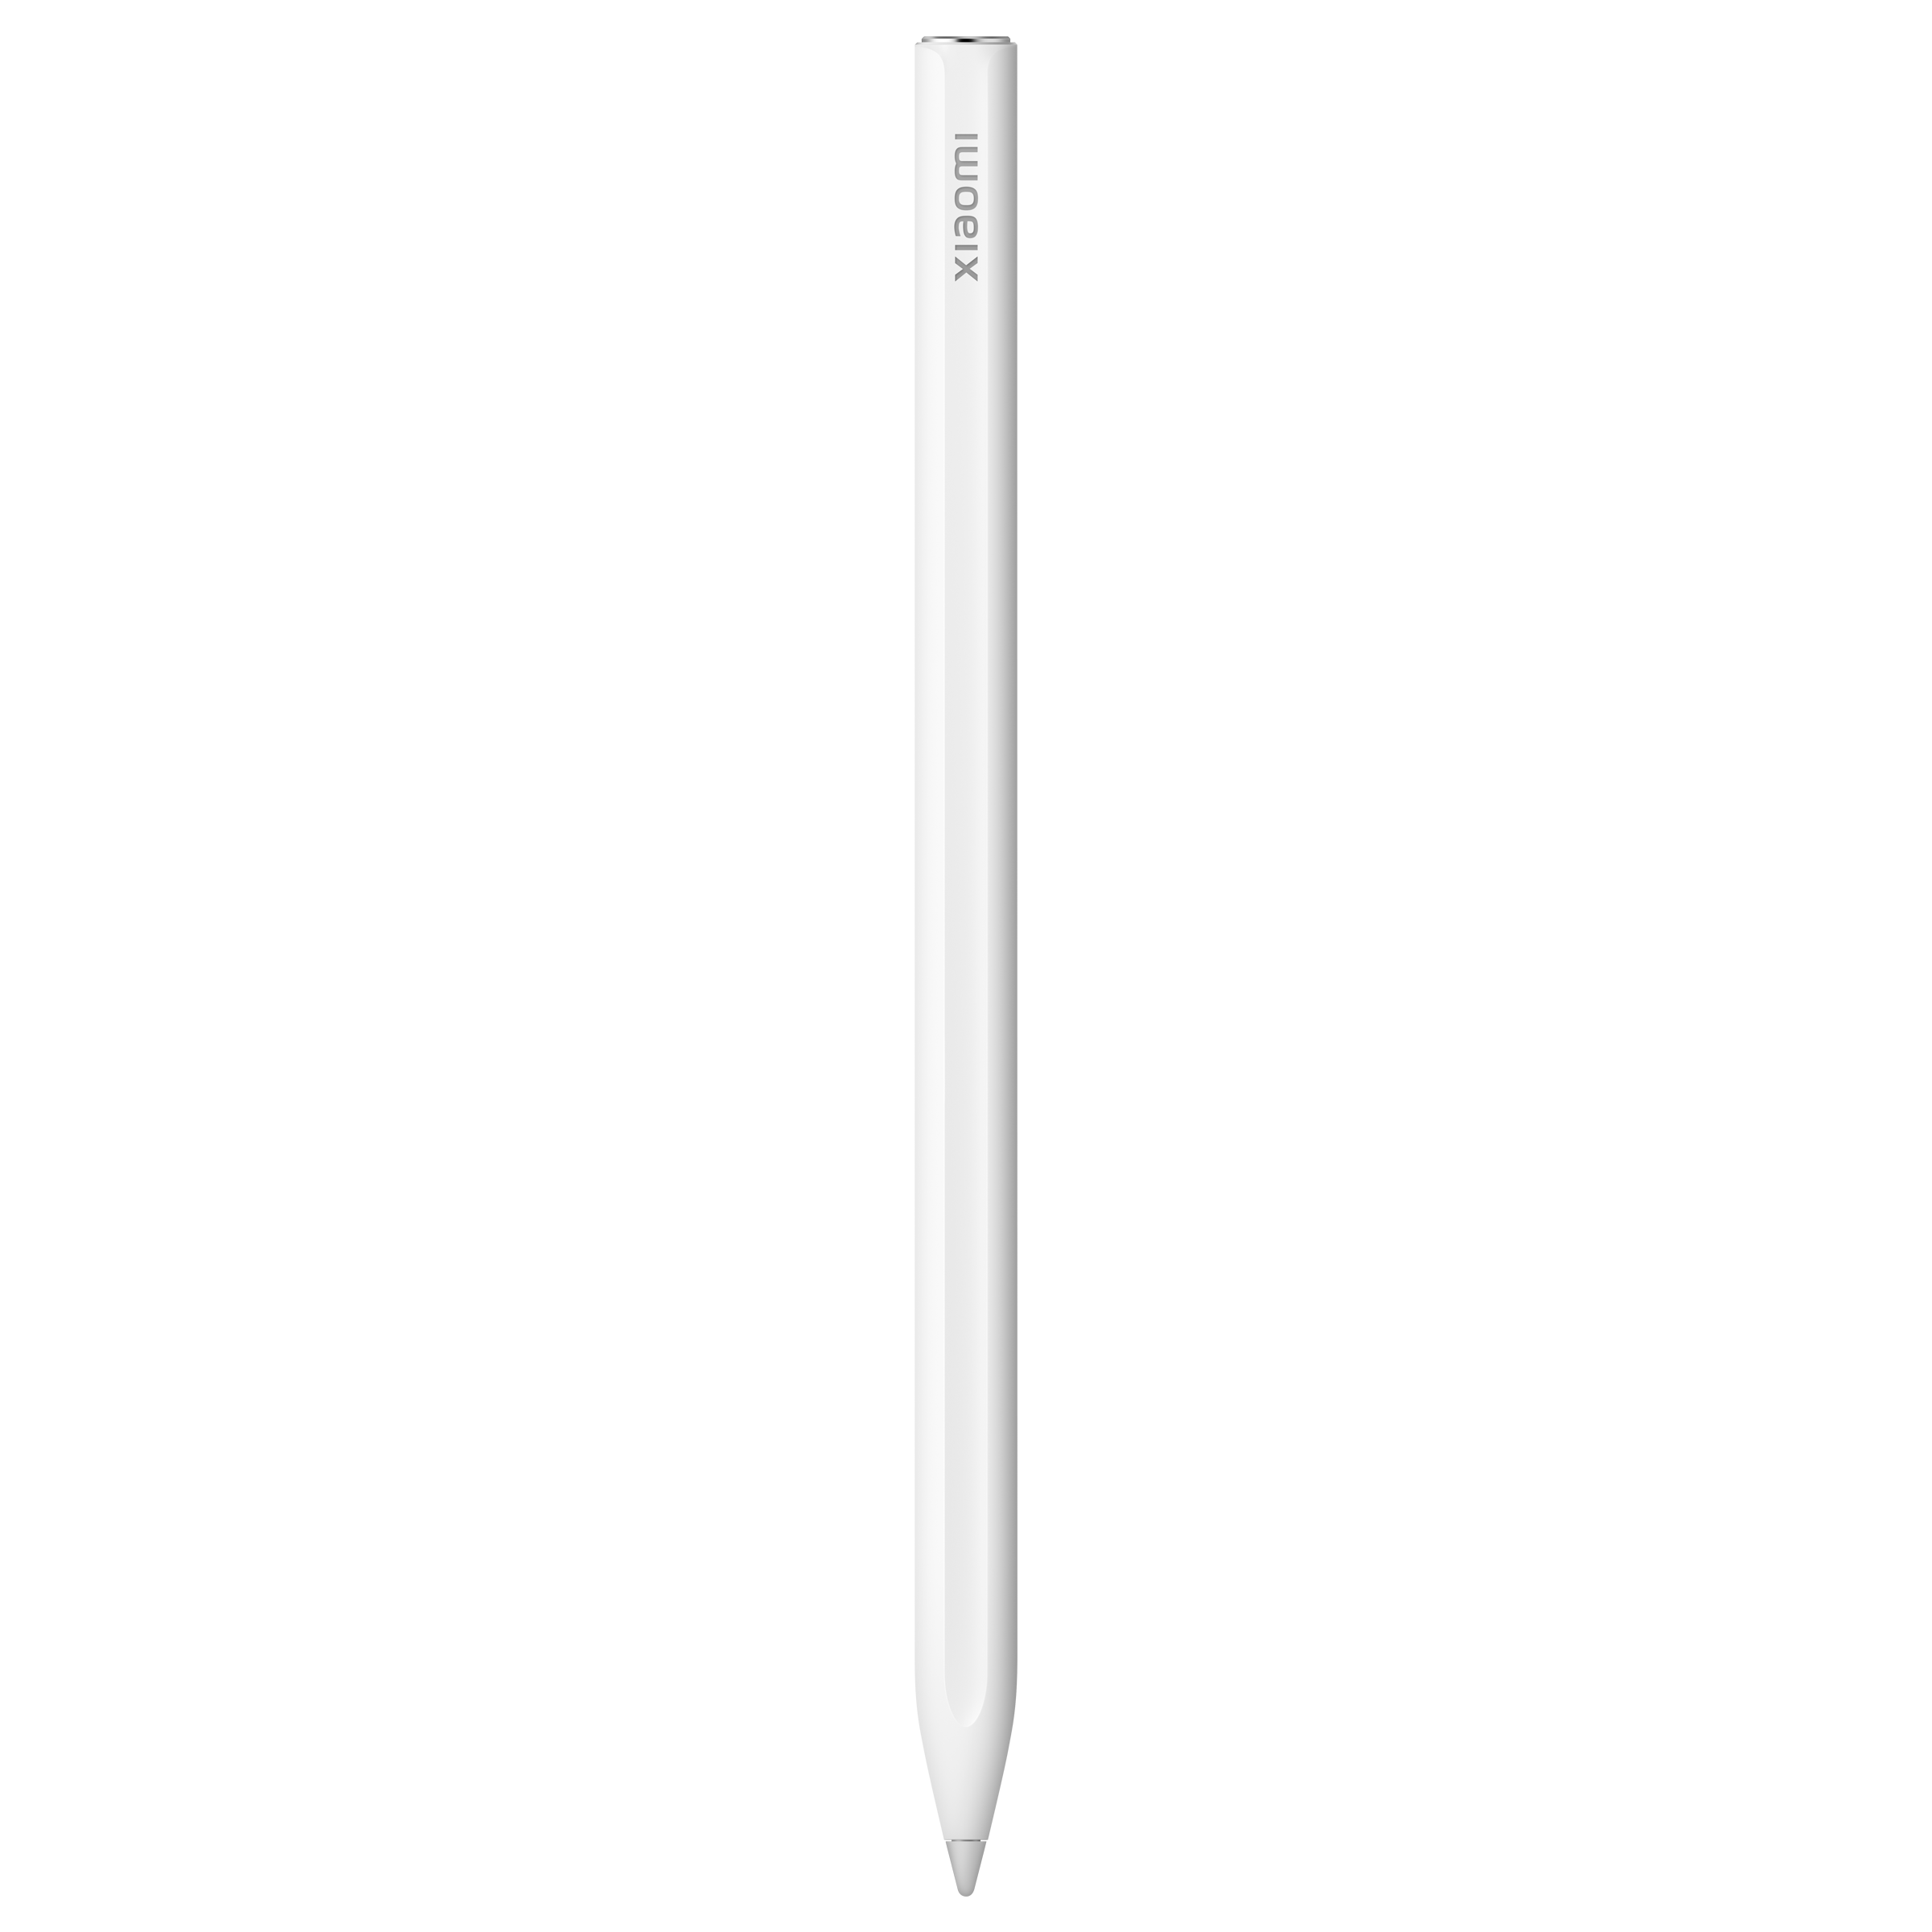 Xiaomi 2nd Generation Smart Pen For Xiaomi Pad 6 (4096 Pressure Sensitivity  Levels, BHR7237GL, White)